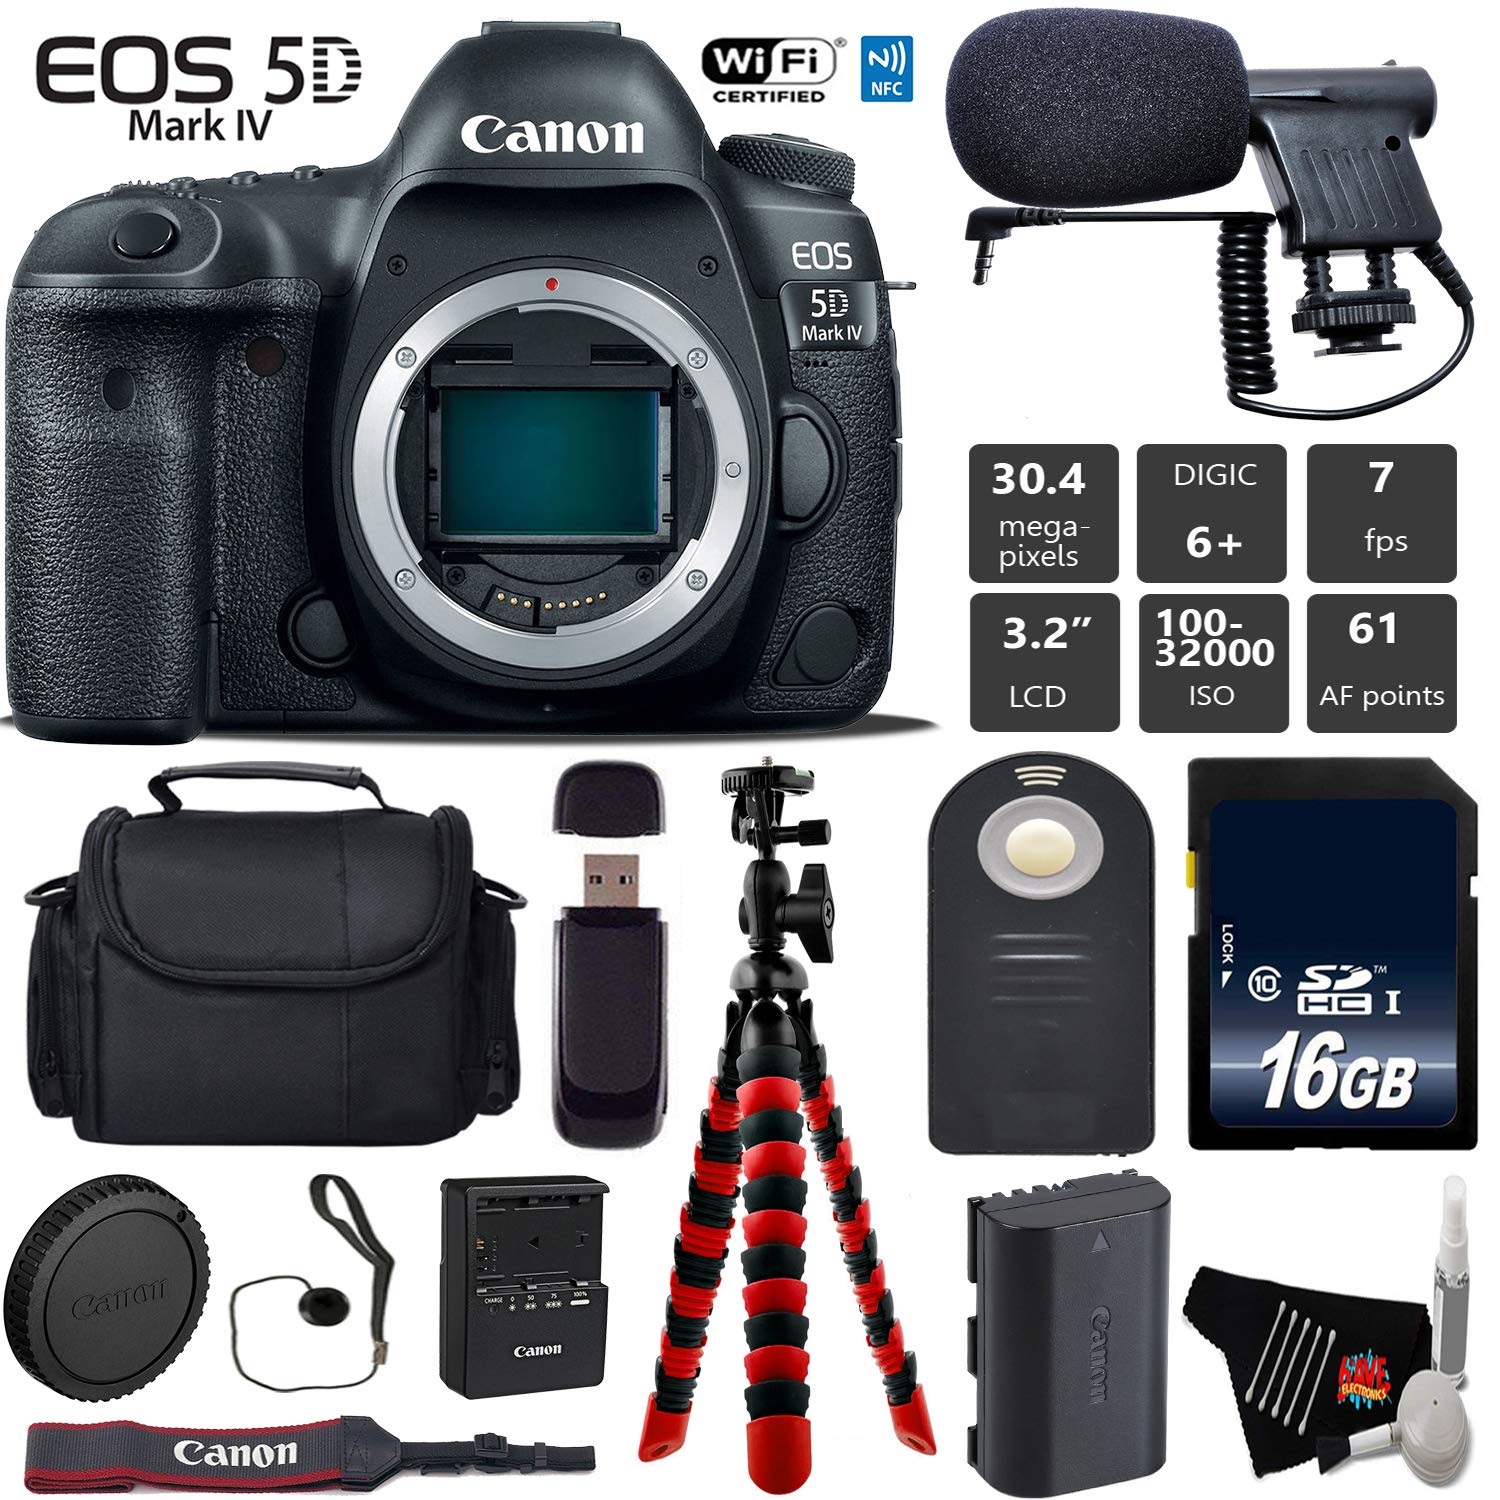 Canon EOS 5D Mark IV DSLR Camera (Body Only) + Wireless Remote + Condenser Microphone + Case + Wrist Strap + Tripod Base Bundle